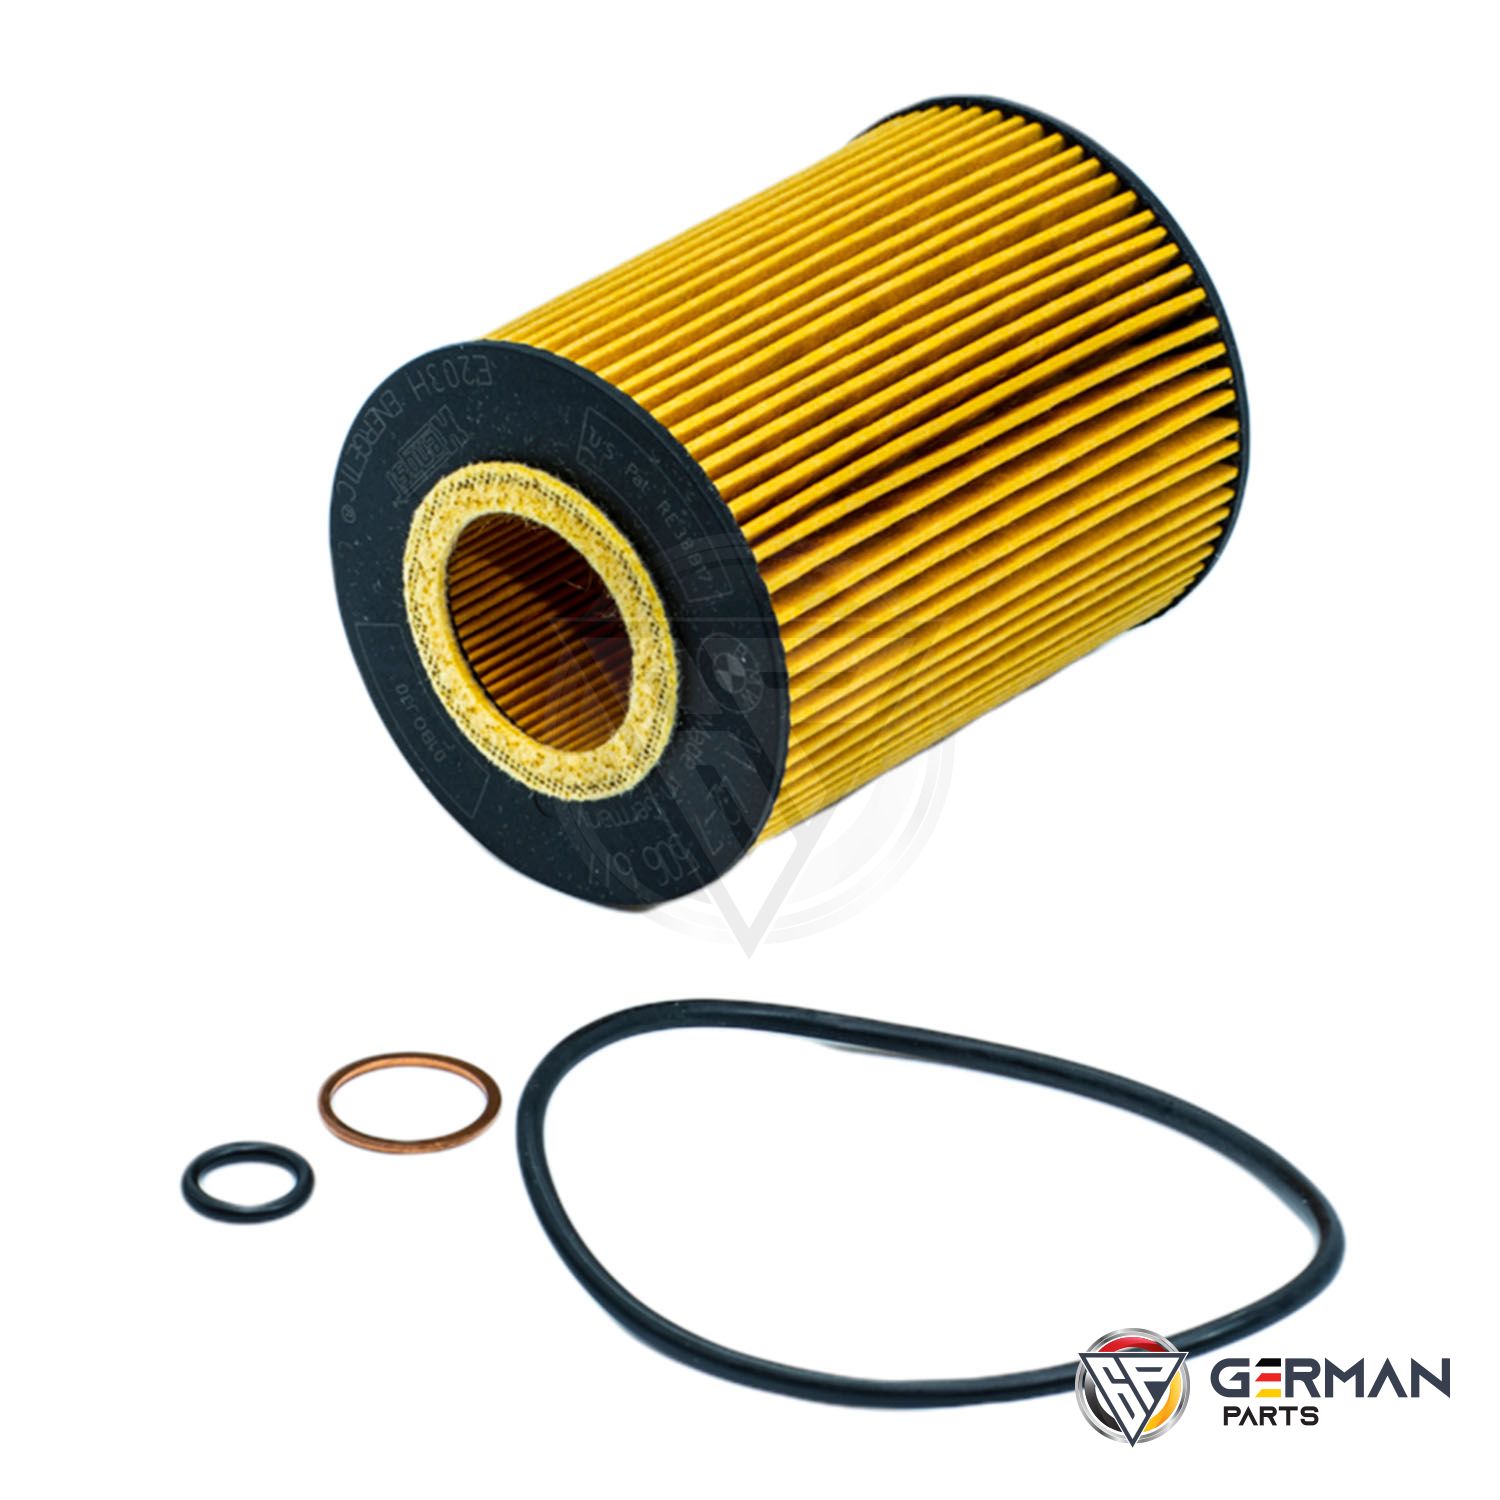 Buy BMW Oil Filter 11427511161 - German Parts